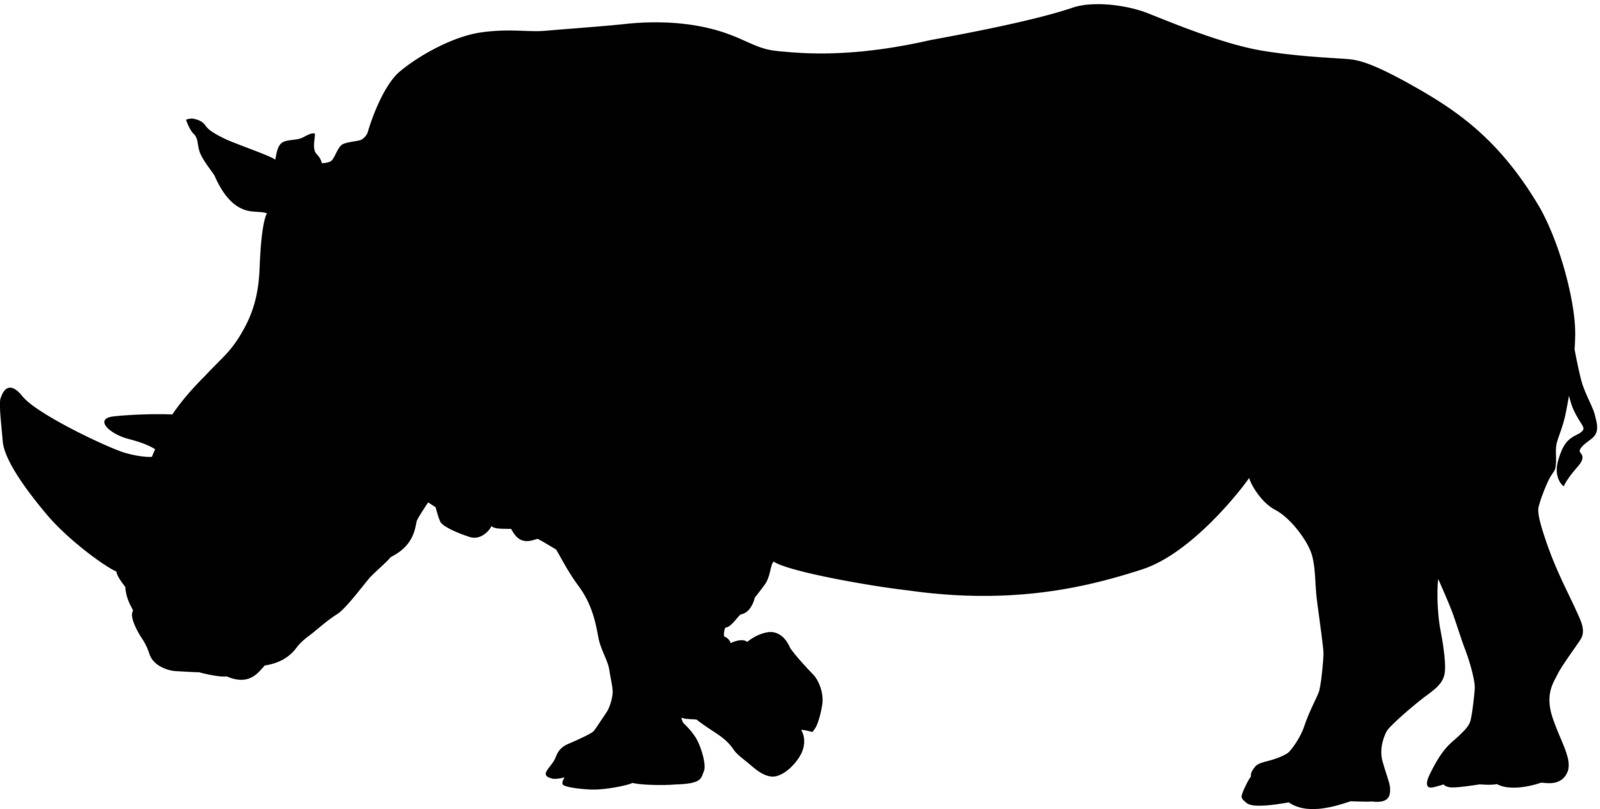 Rhino silhouette. Vector illustration. EPS 8